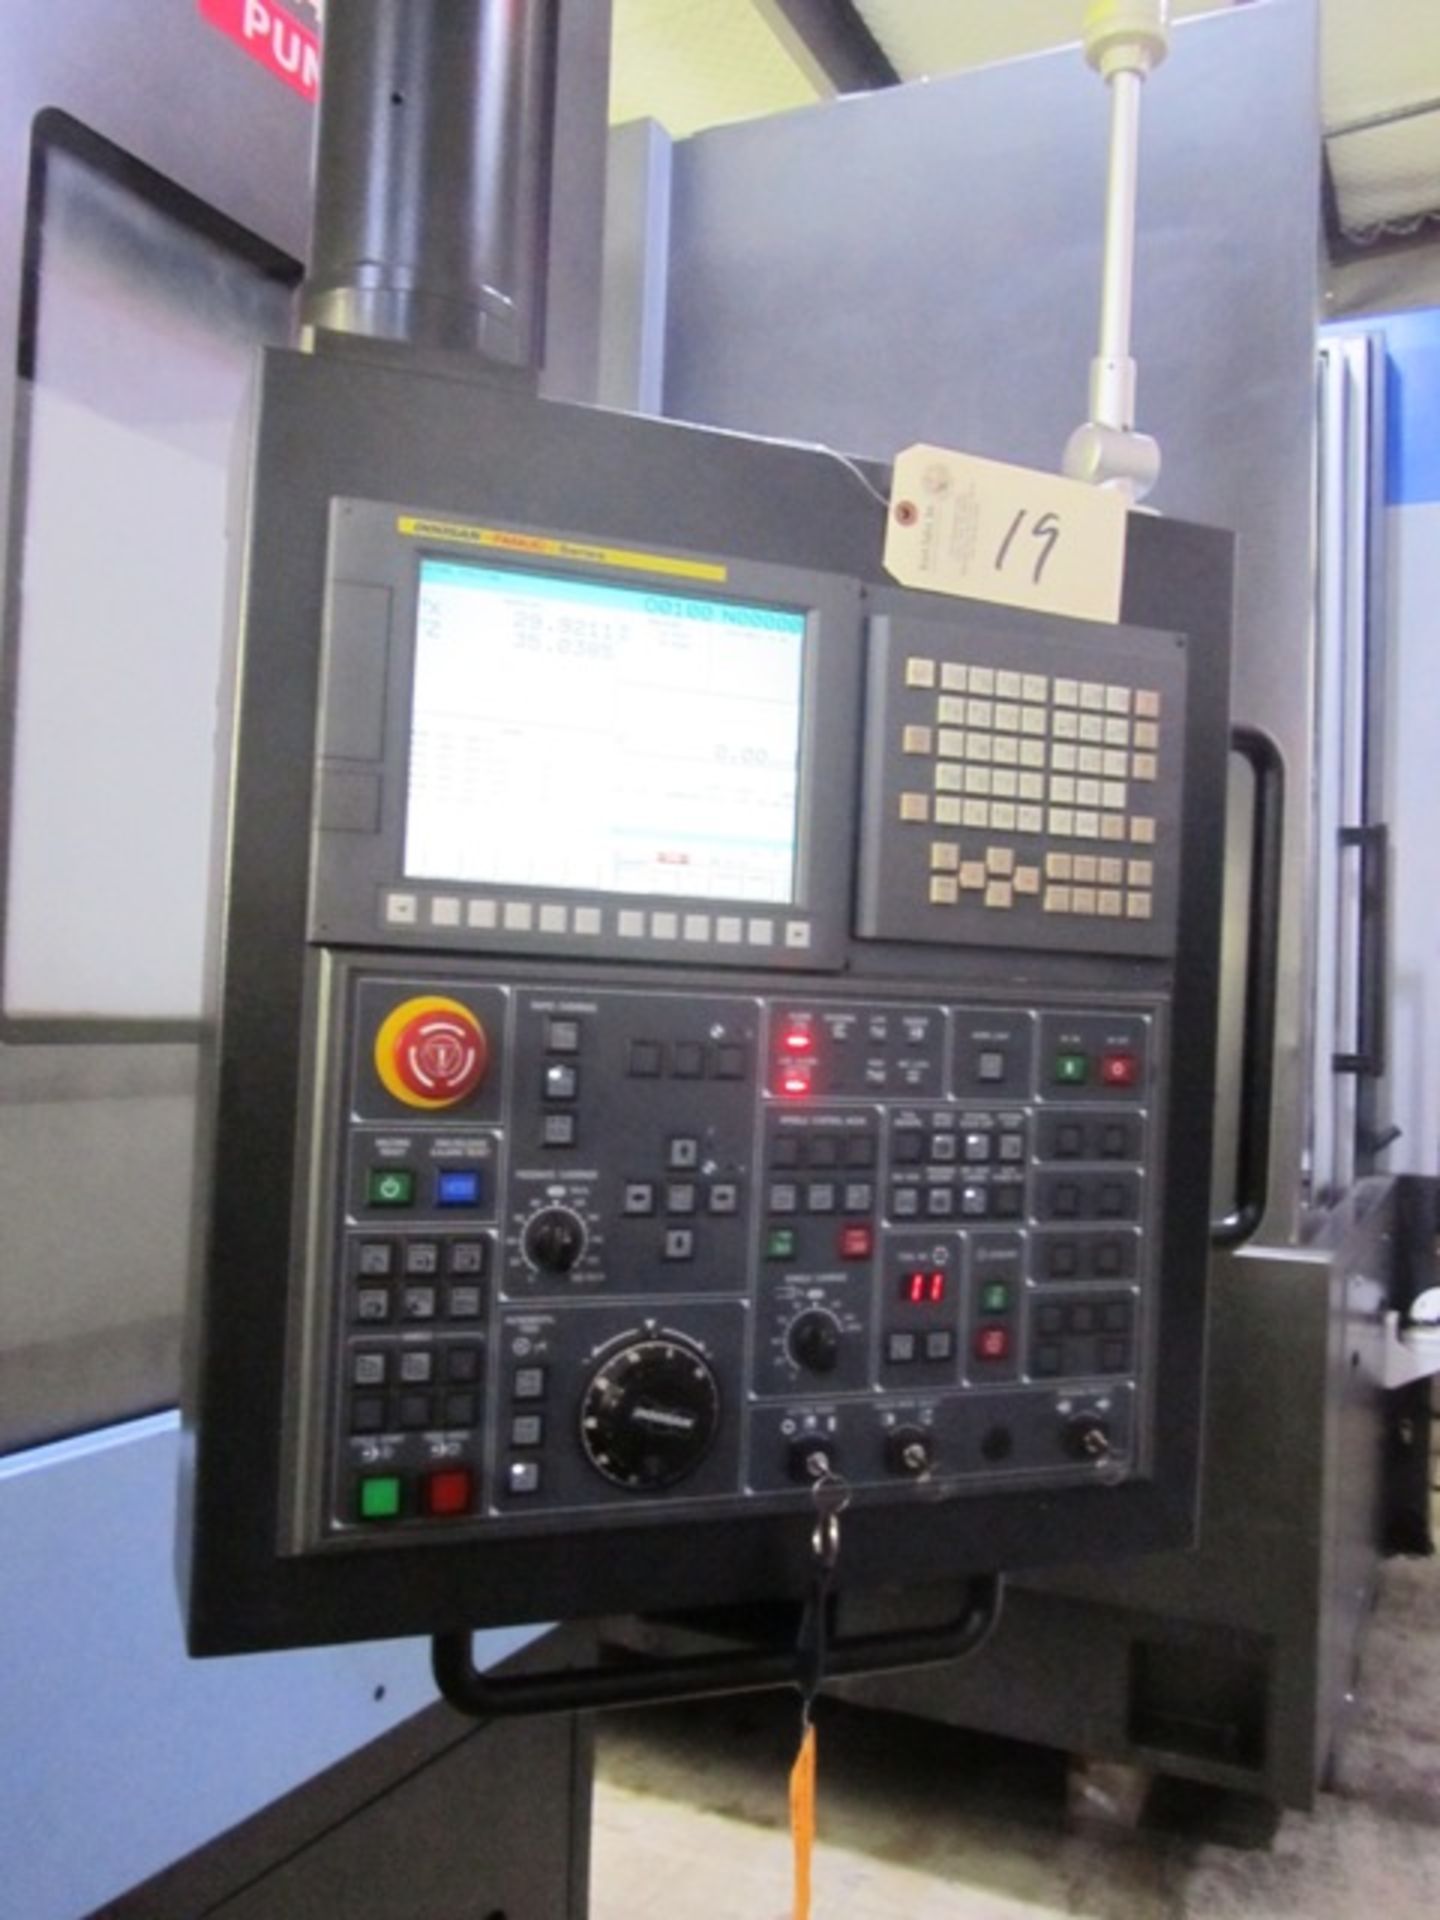 Doosan VT900 CNC Vertical Turning Center - Image 2 of 7